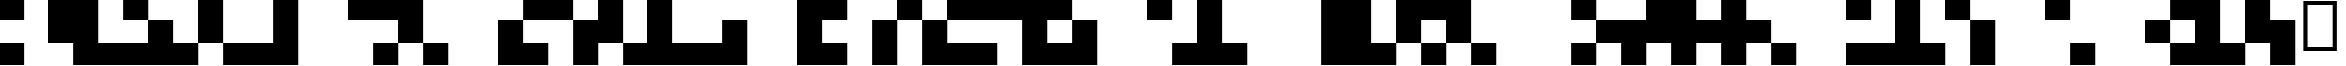 Пример написания шрифтом Arial Alternative Symbol текста на французском